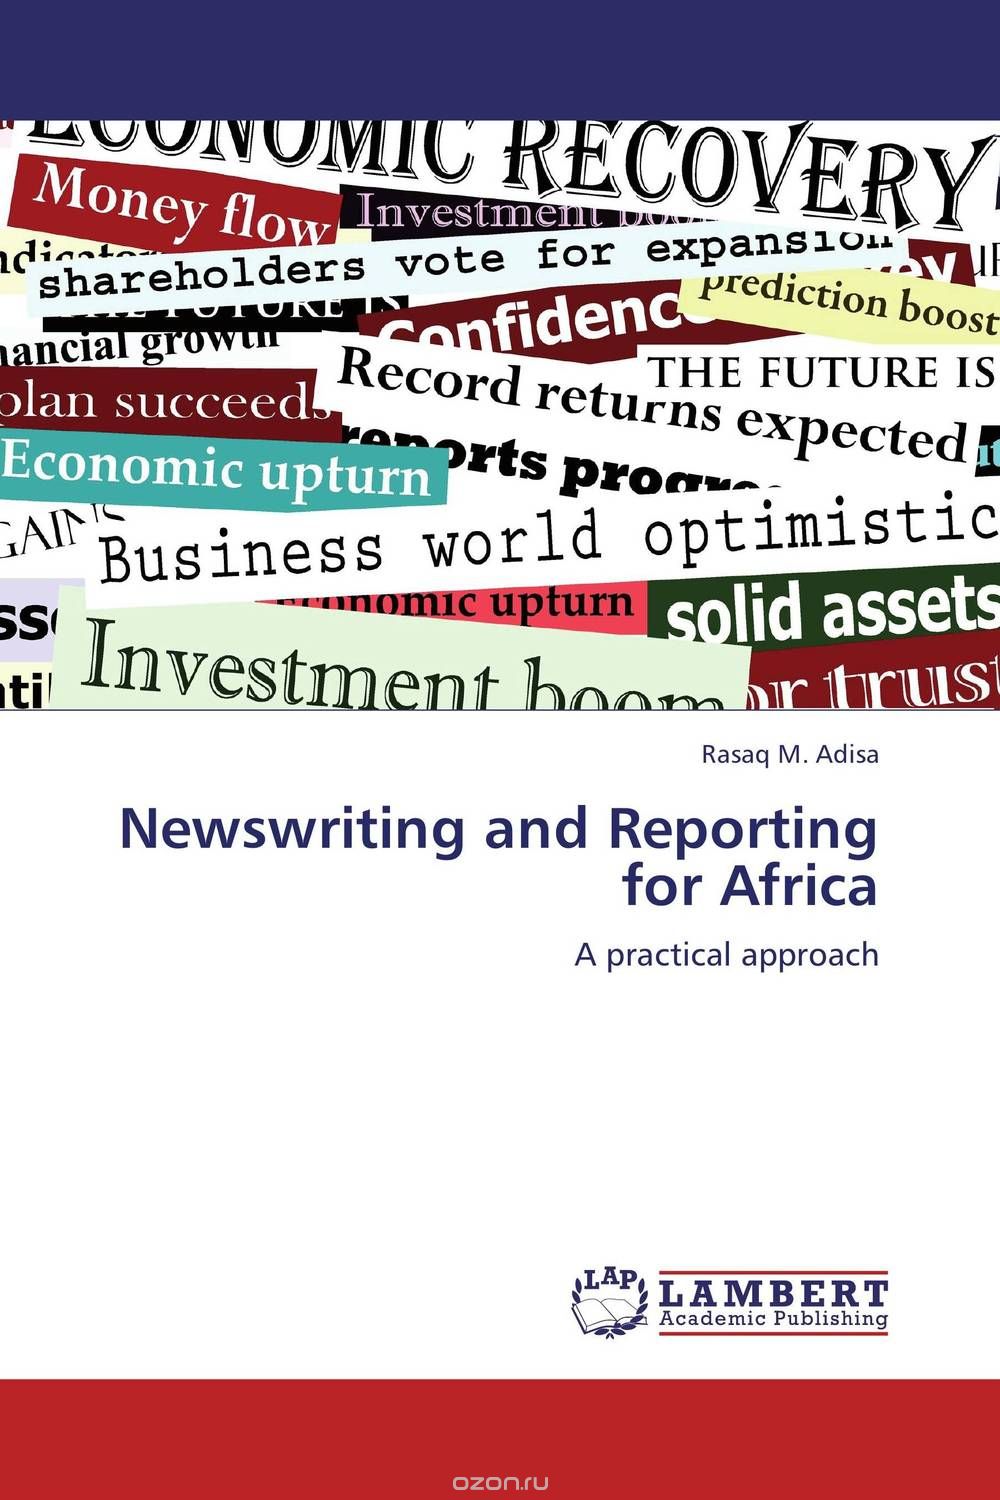 Скачать книгу "Newswriting and Reporting for Africa"